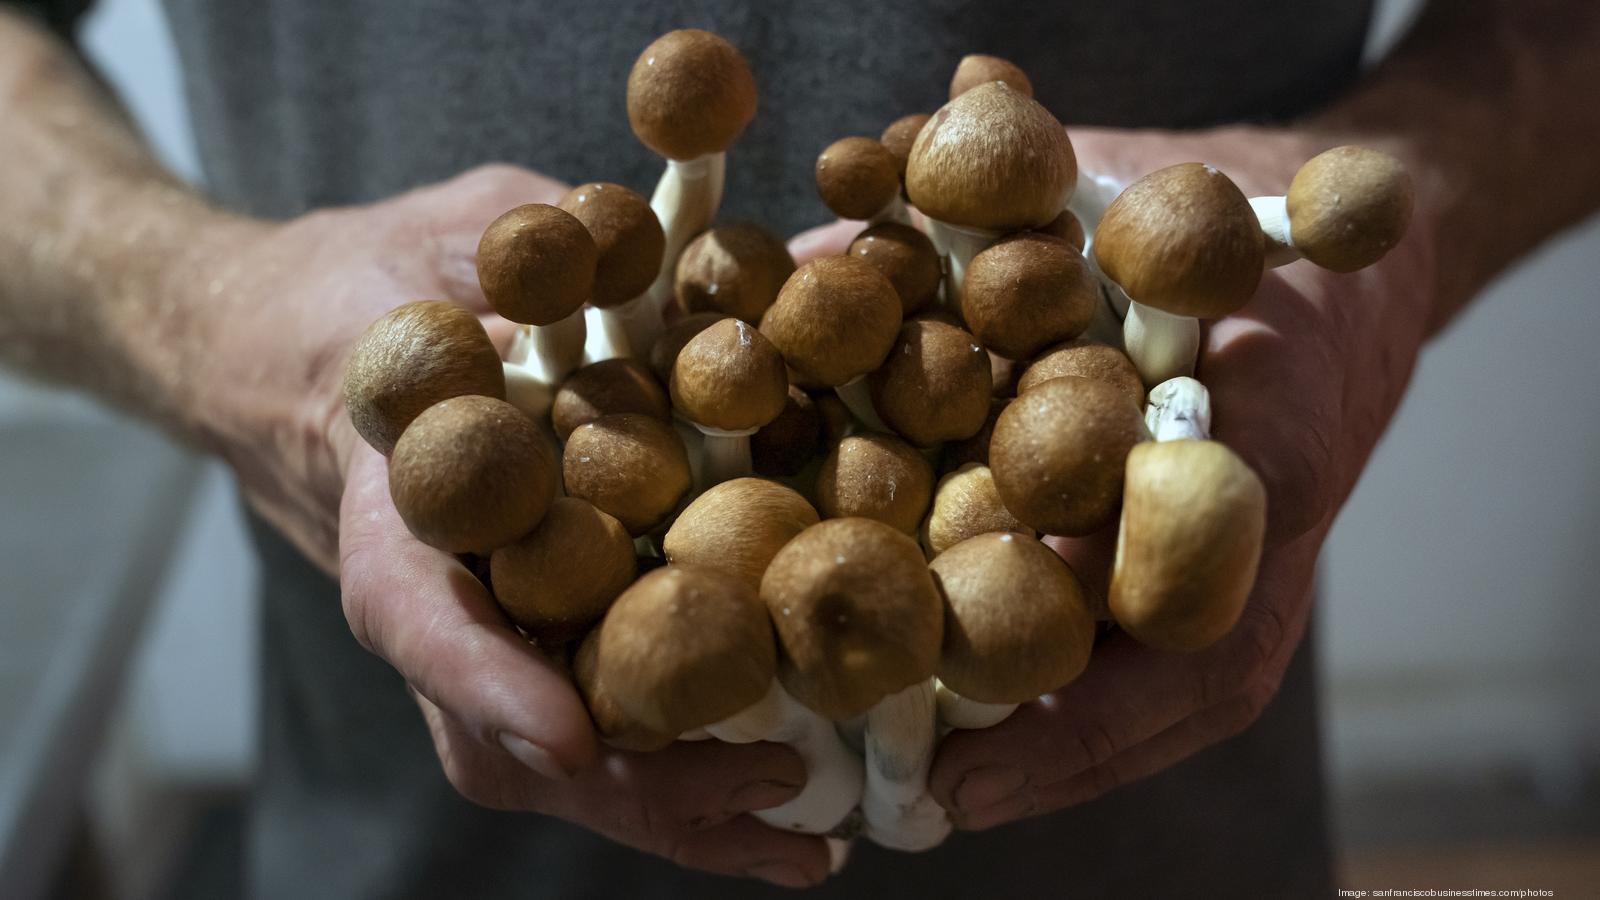 Psychedelic Spotlight on LinkedIn: When you make a mushroom